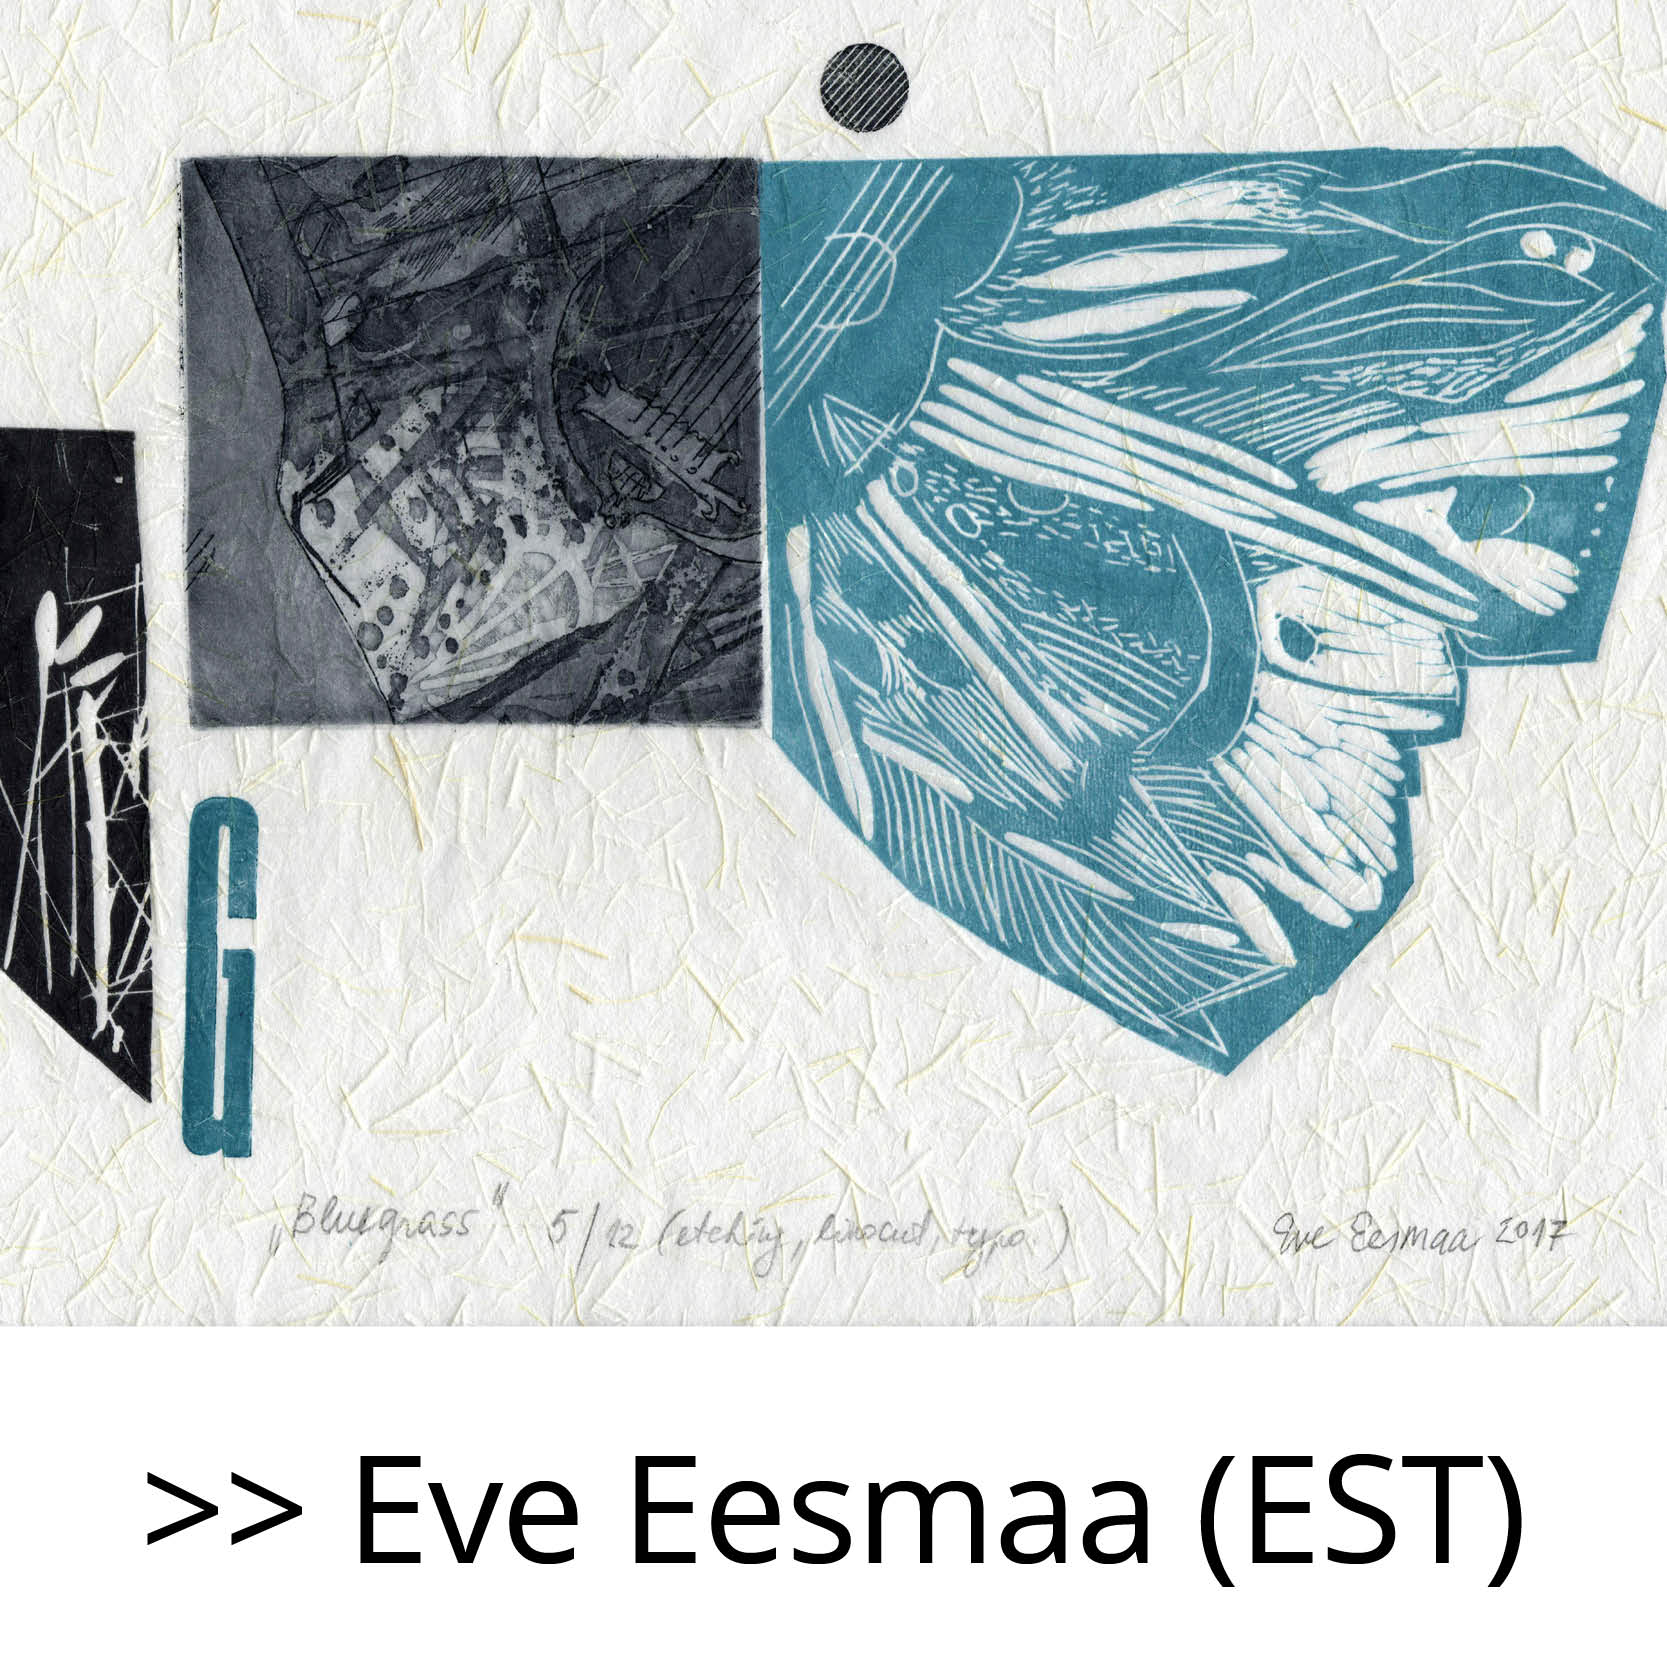 Eve_Eesmaa_(EST)